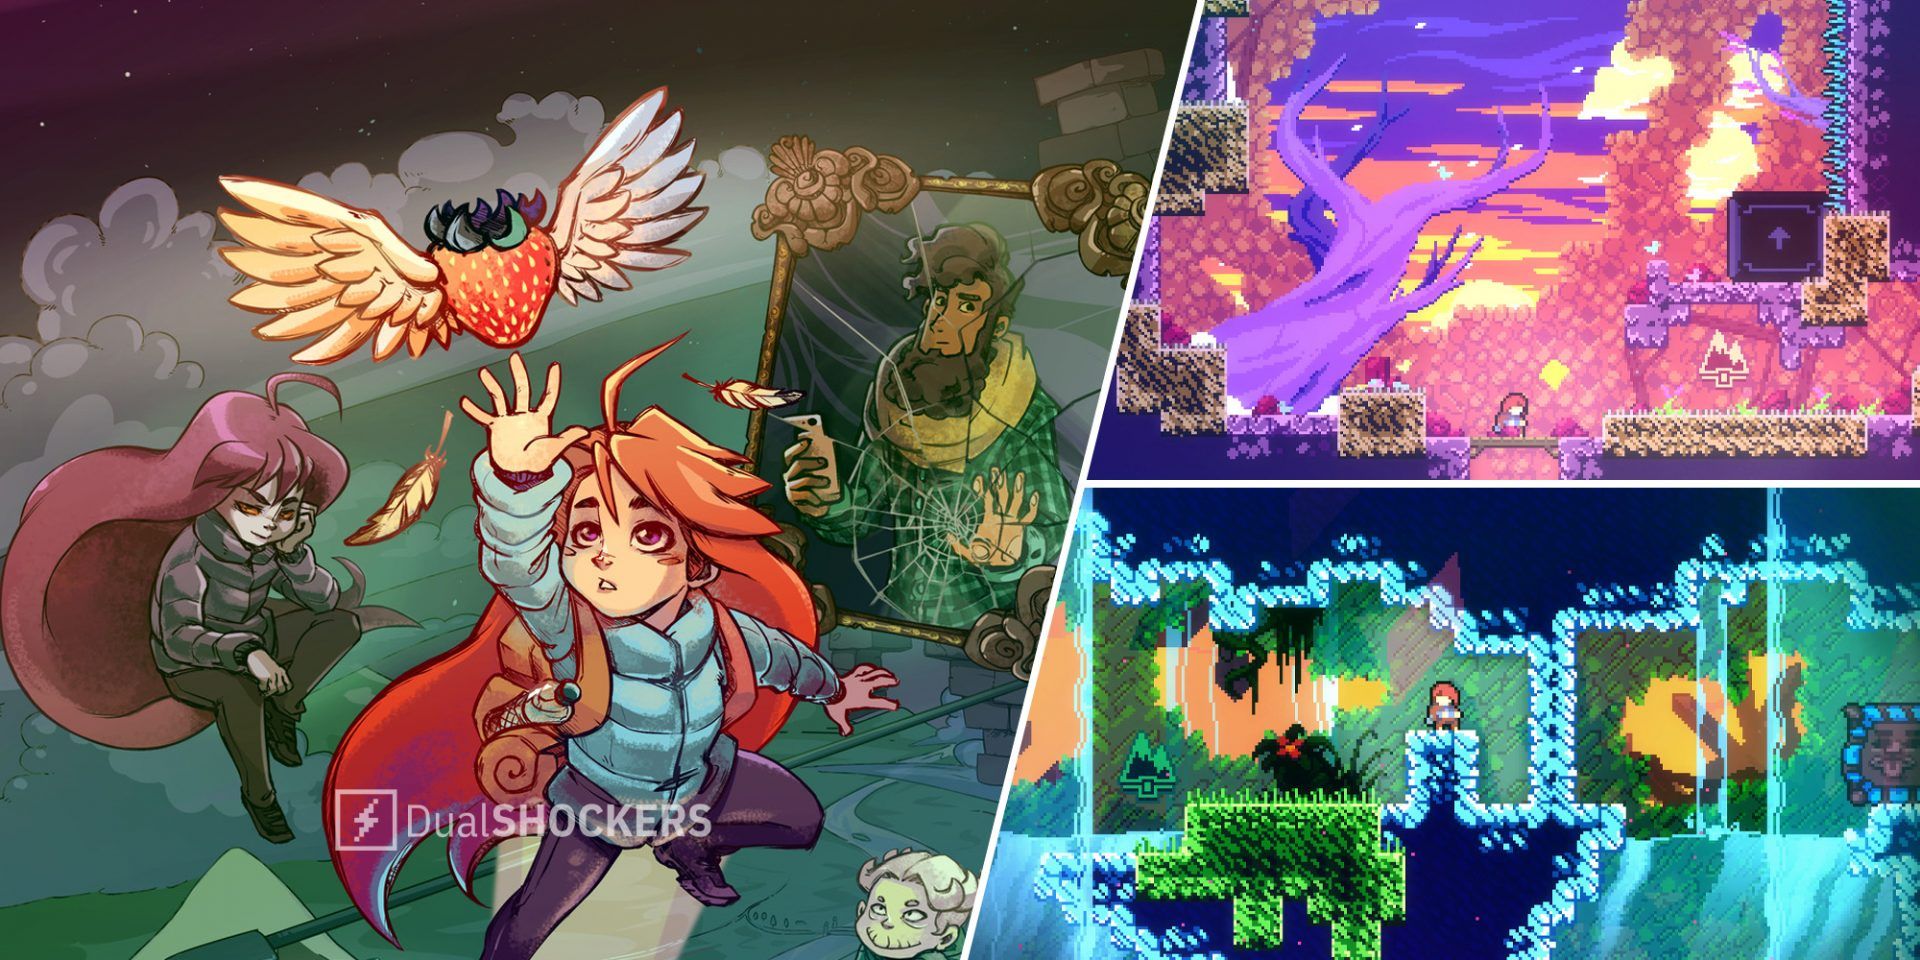 Celeste characters art on left, Celeste level screenshot top right and bottom right